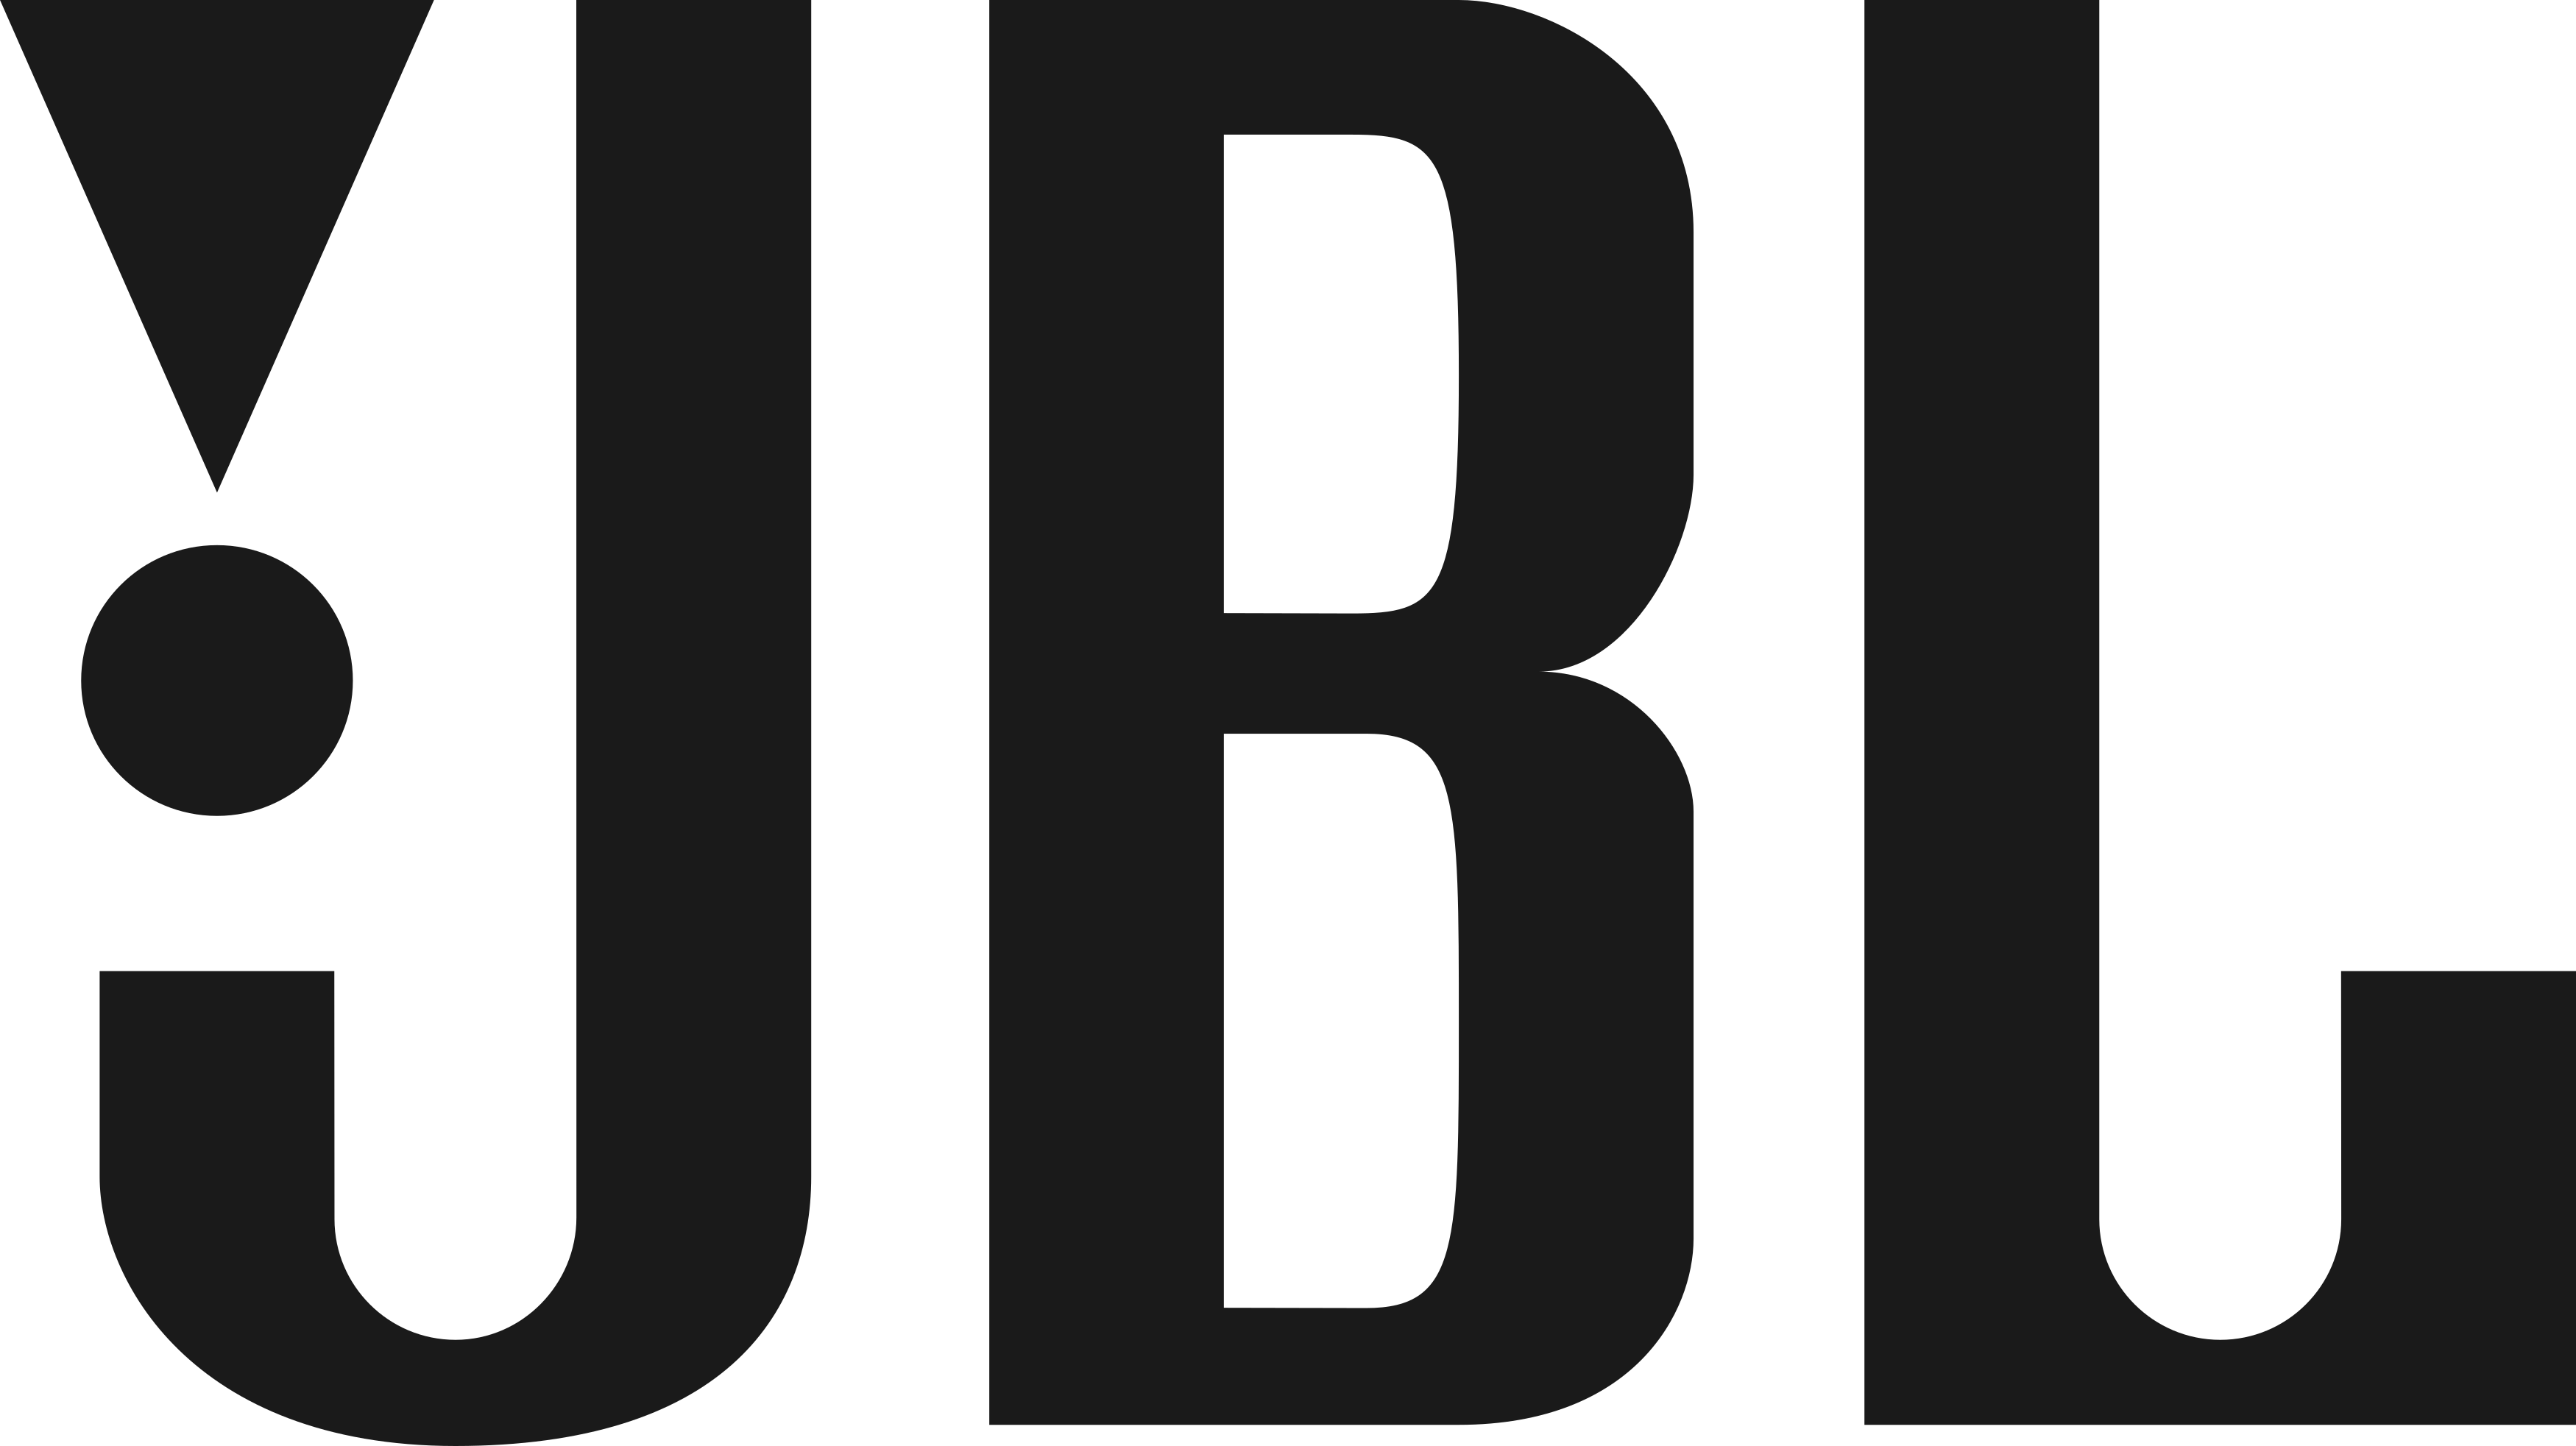 jbl logo 8 1 - JBL Logo